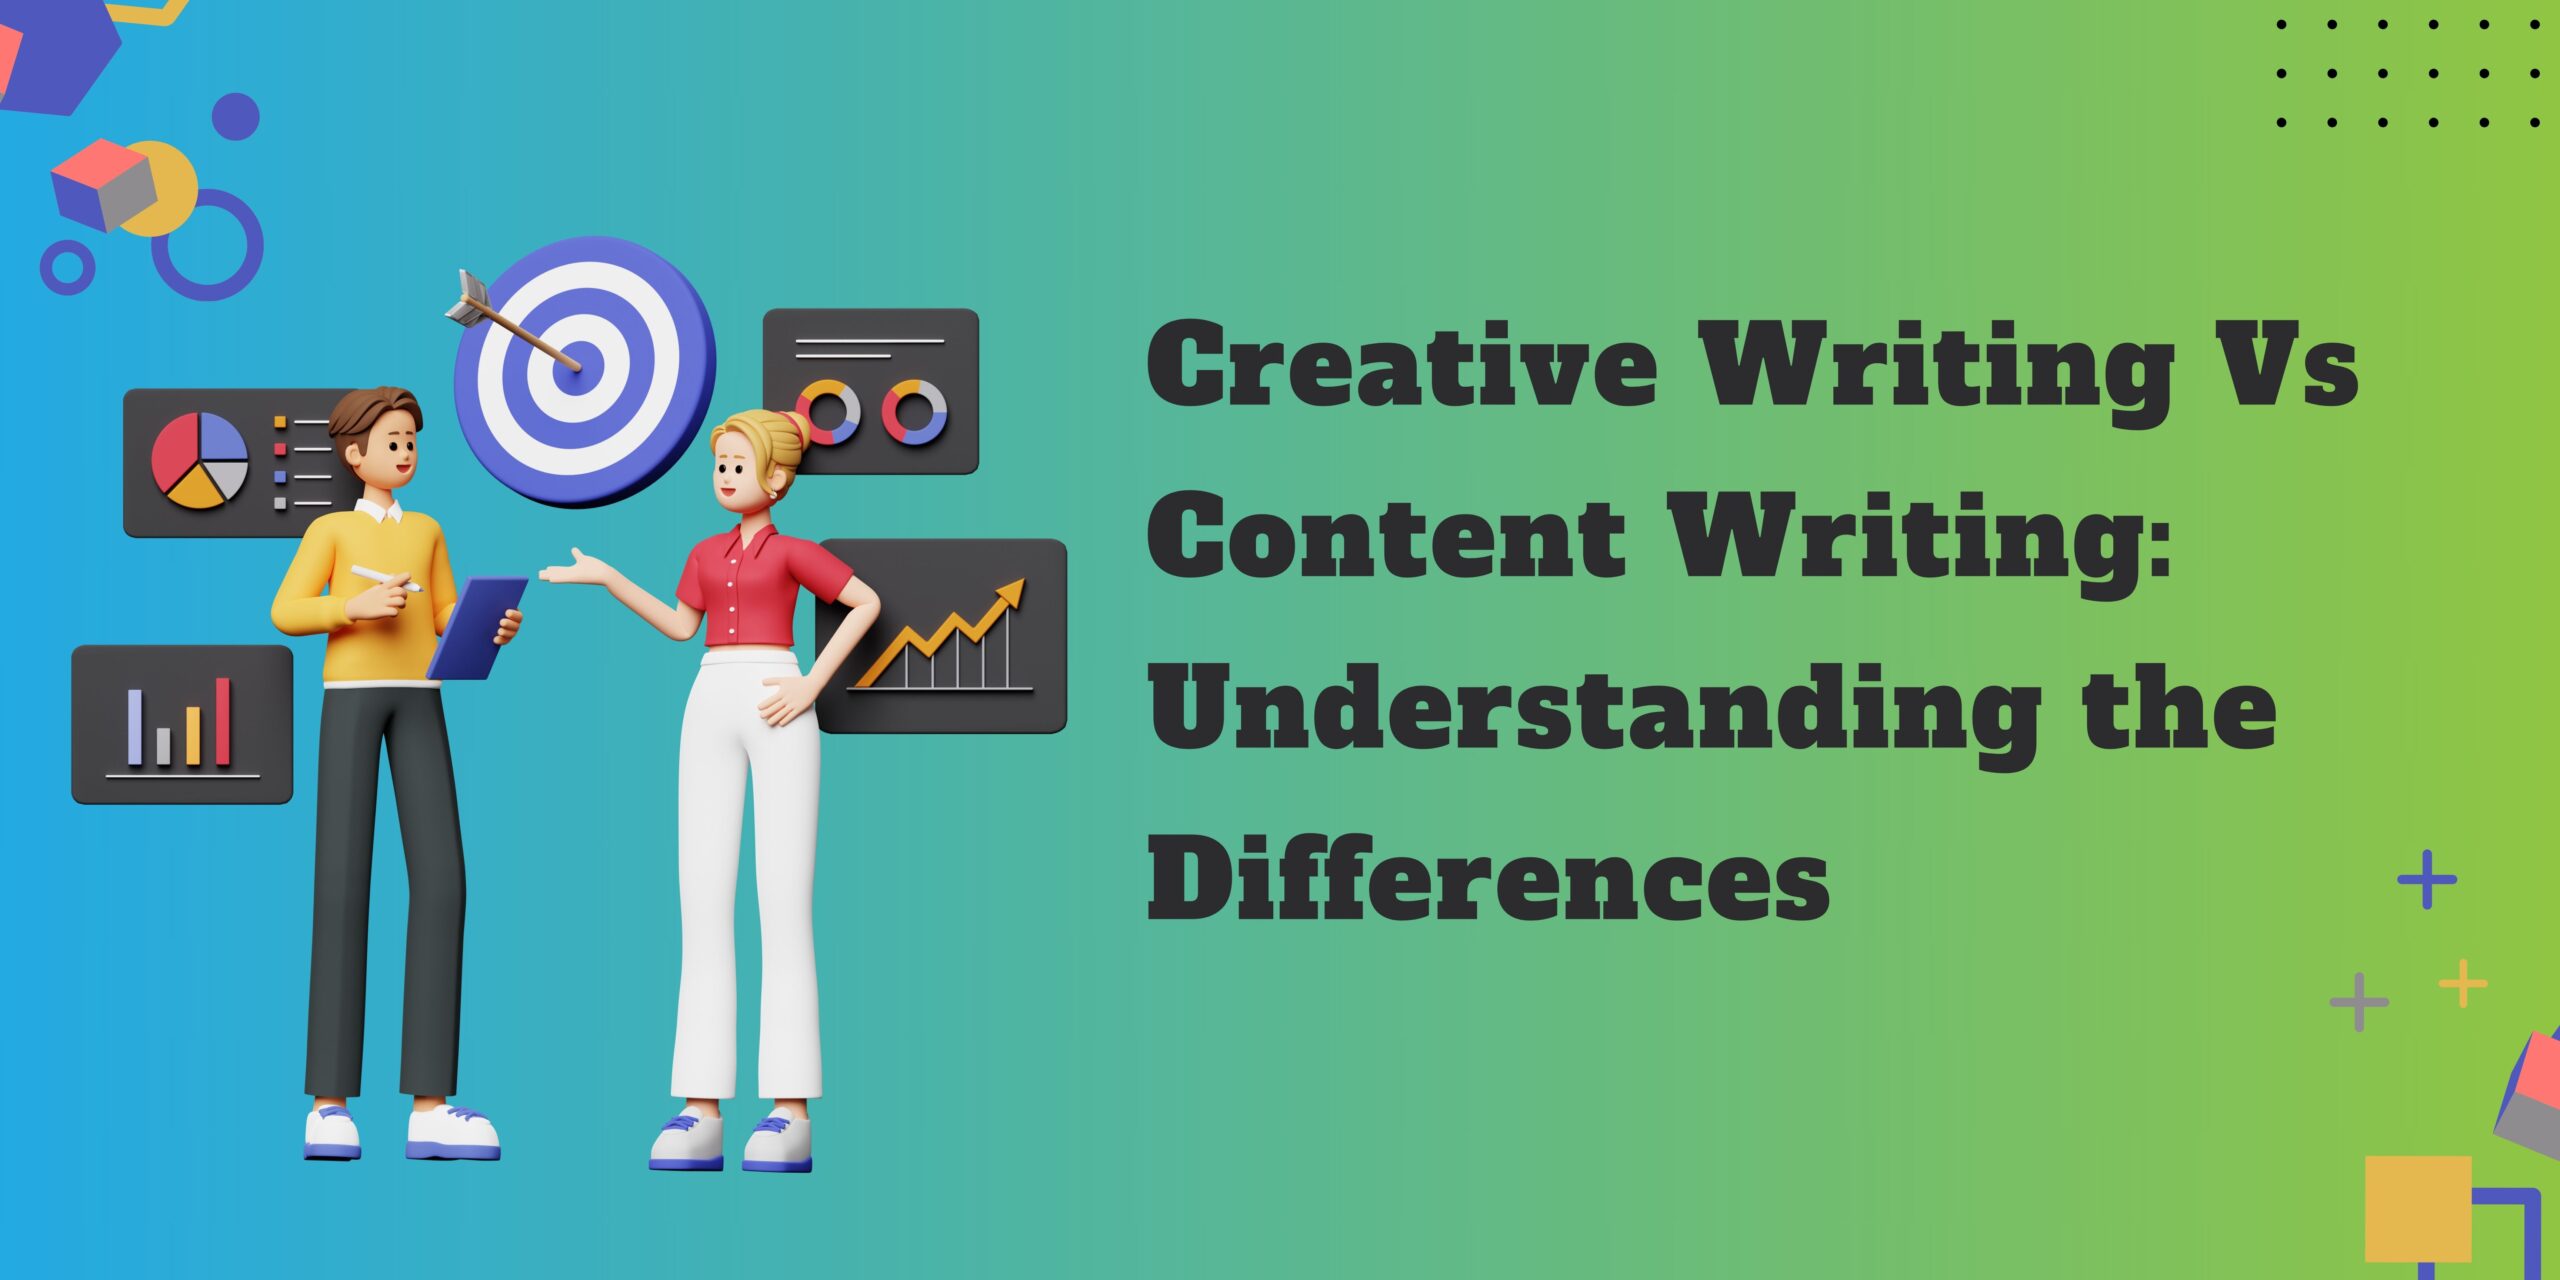 Creative writing vs content writing